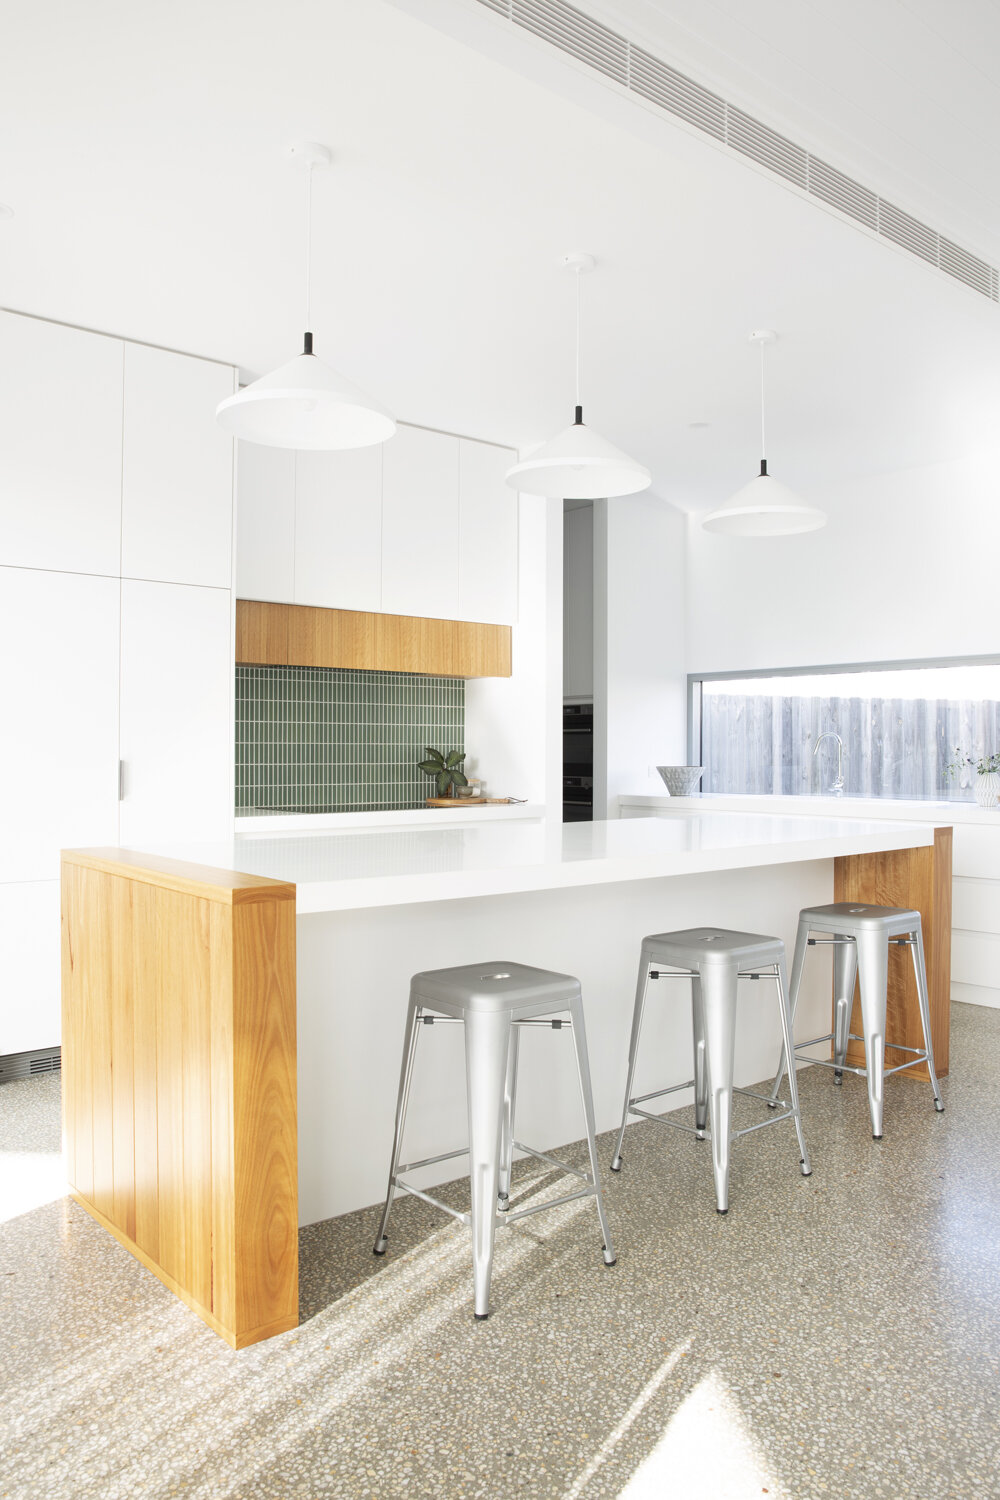 Sorrento beach house kitchen designed by Melbourne interior designer Meredith Lee